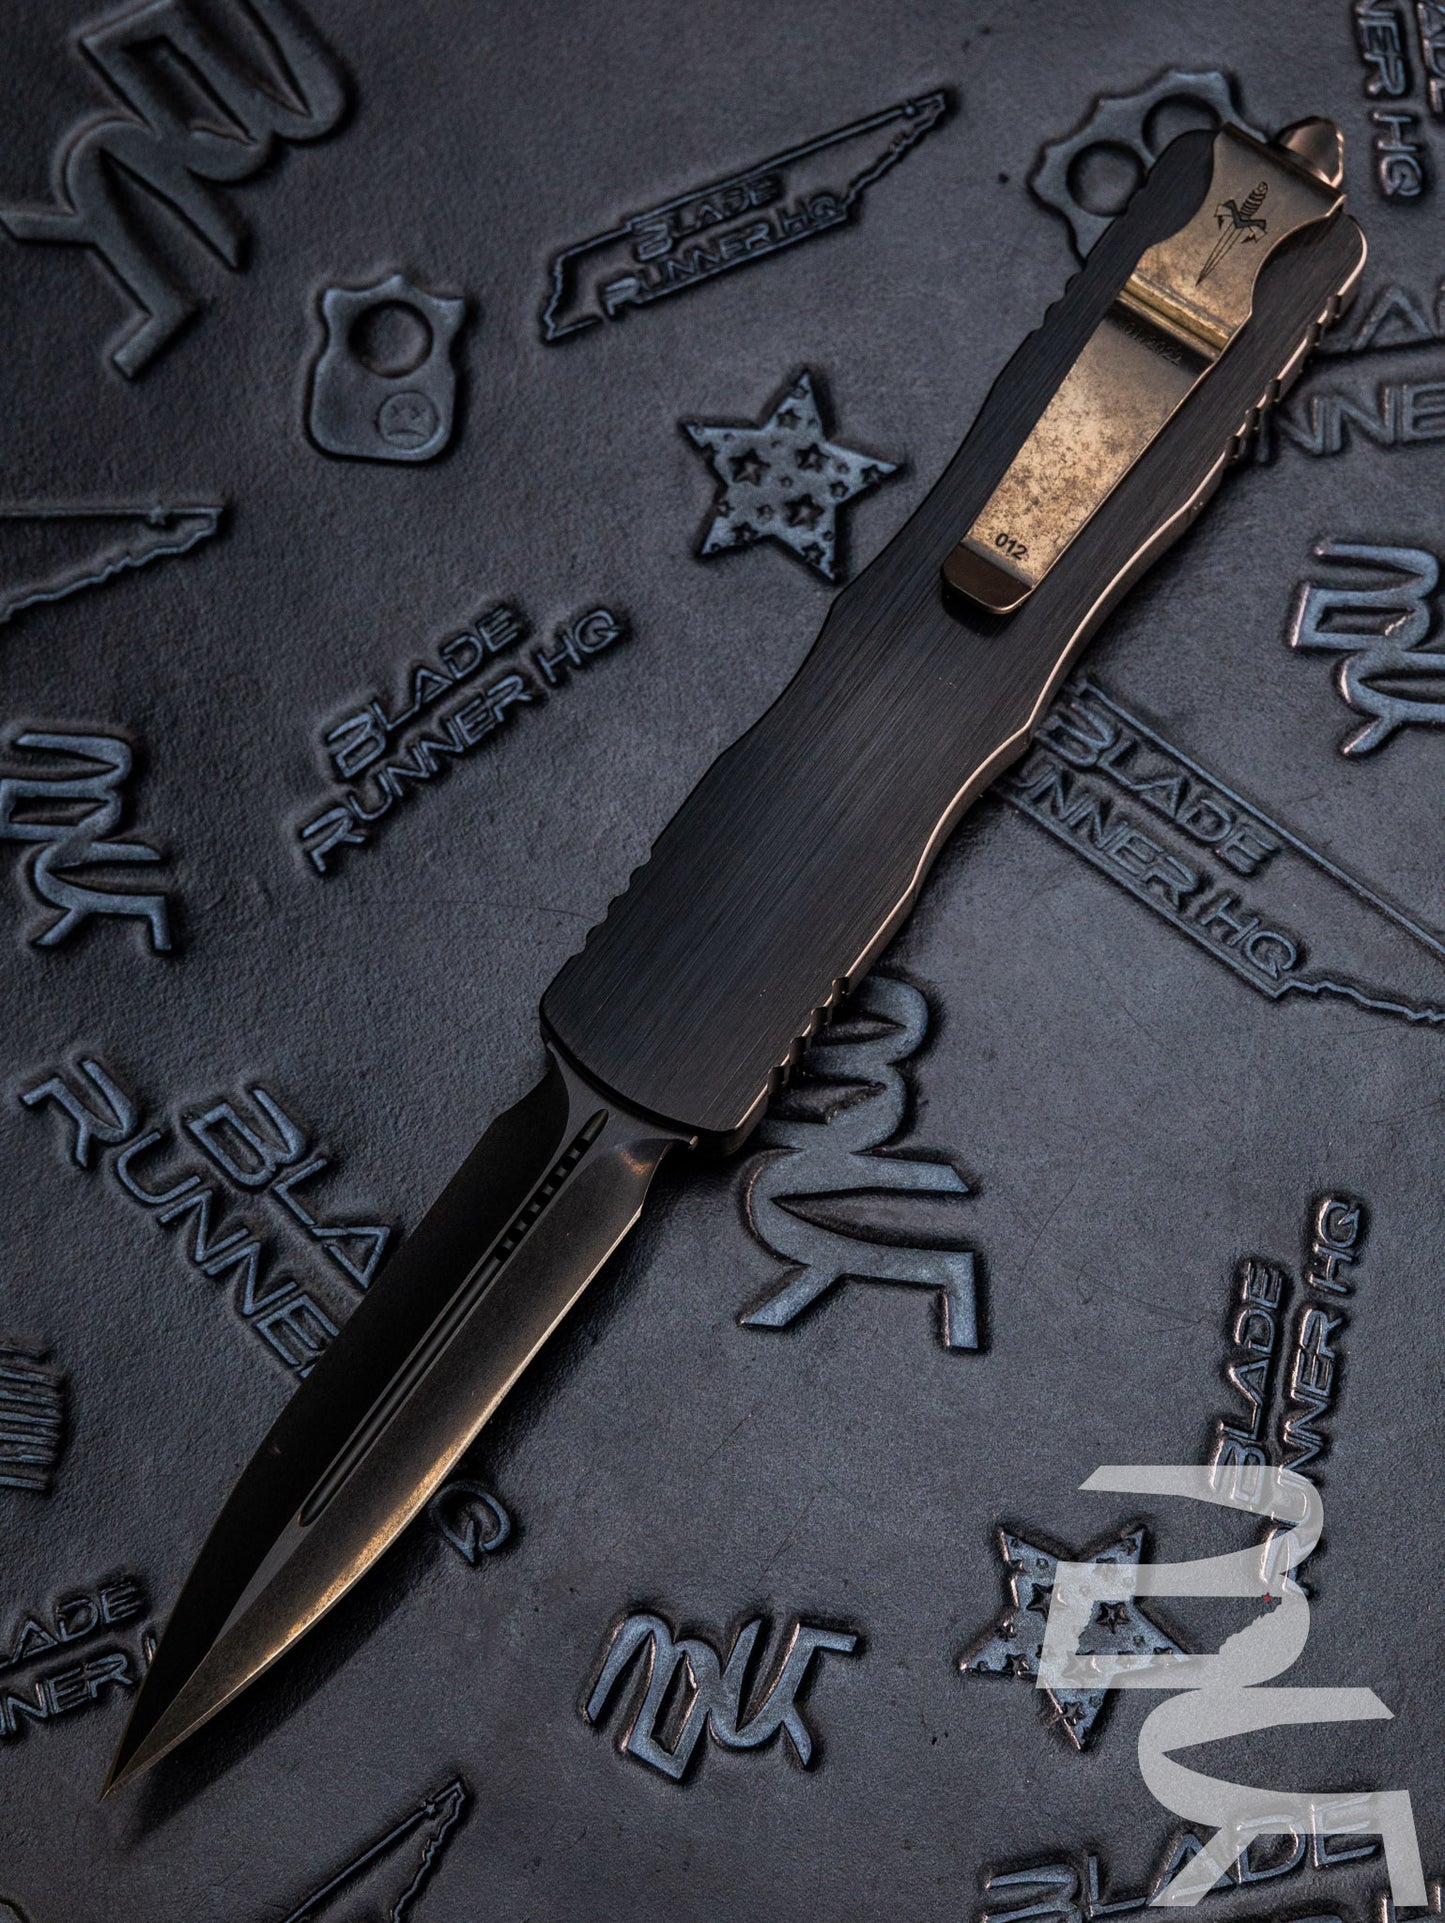 Pre Owned MARFIONE CUSTOM "DIRAC DELTA" BLACK OTF AUTOMATIC KNIFE 3.75" DAGGER DLC Two Tone STONEWASH